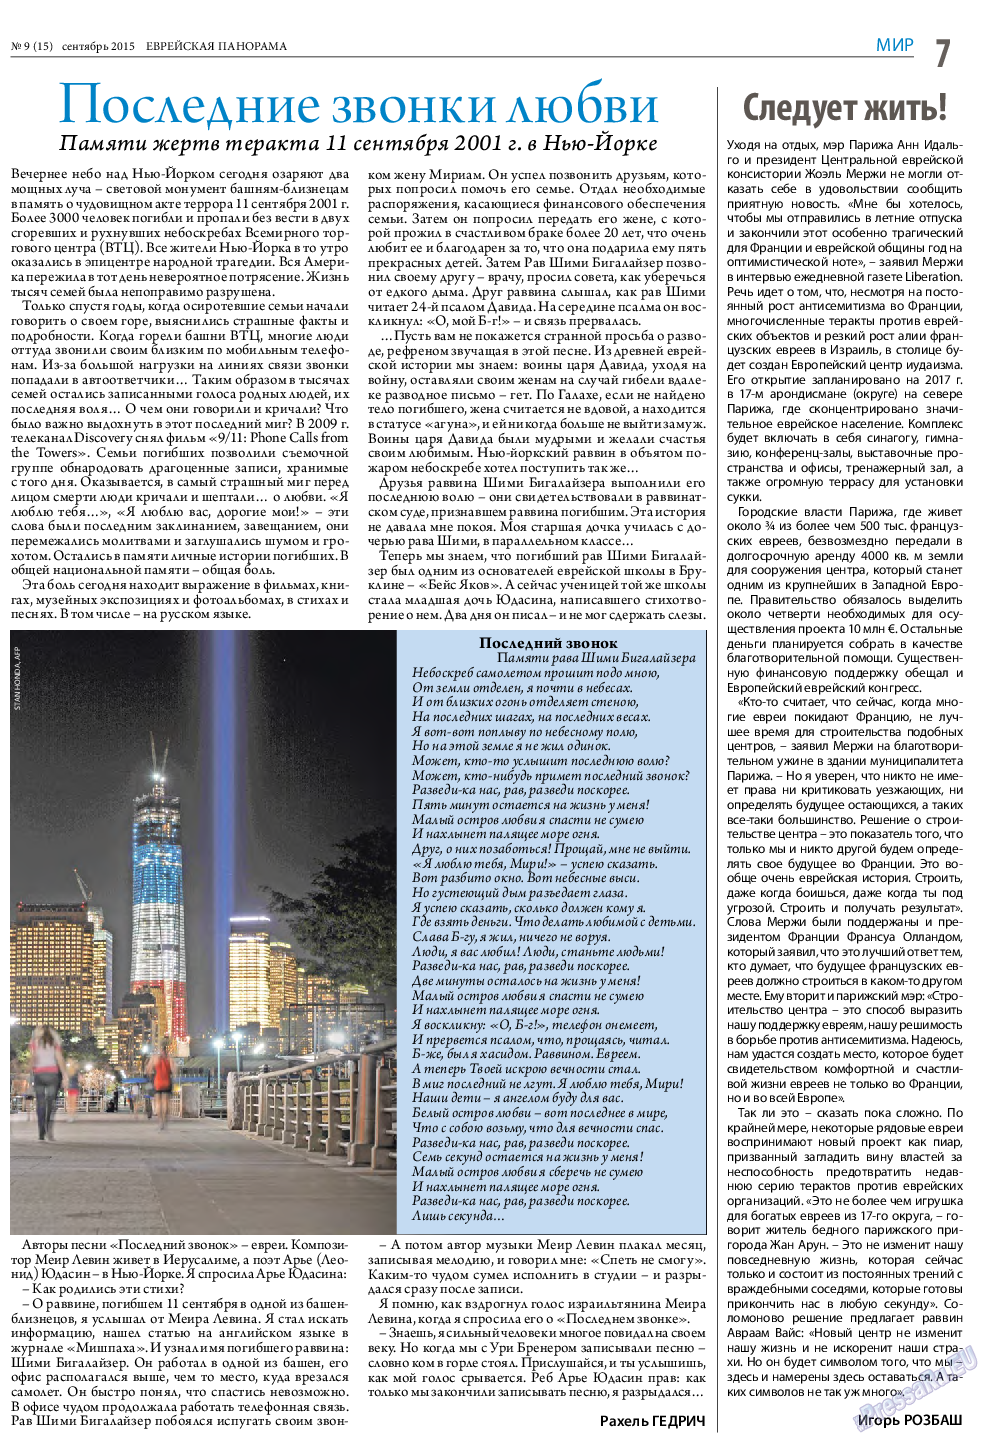 Еврейская панорама, газета. 2015 №9 стр.7